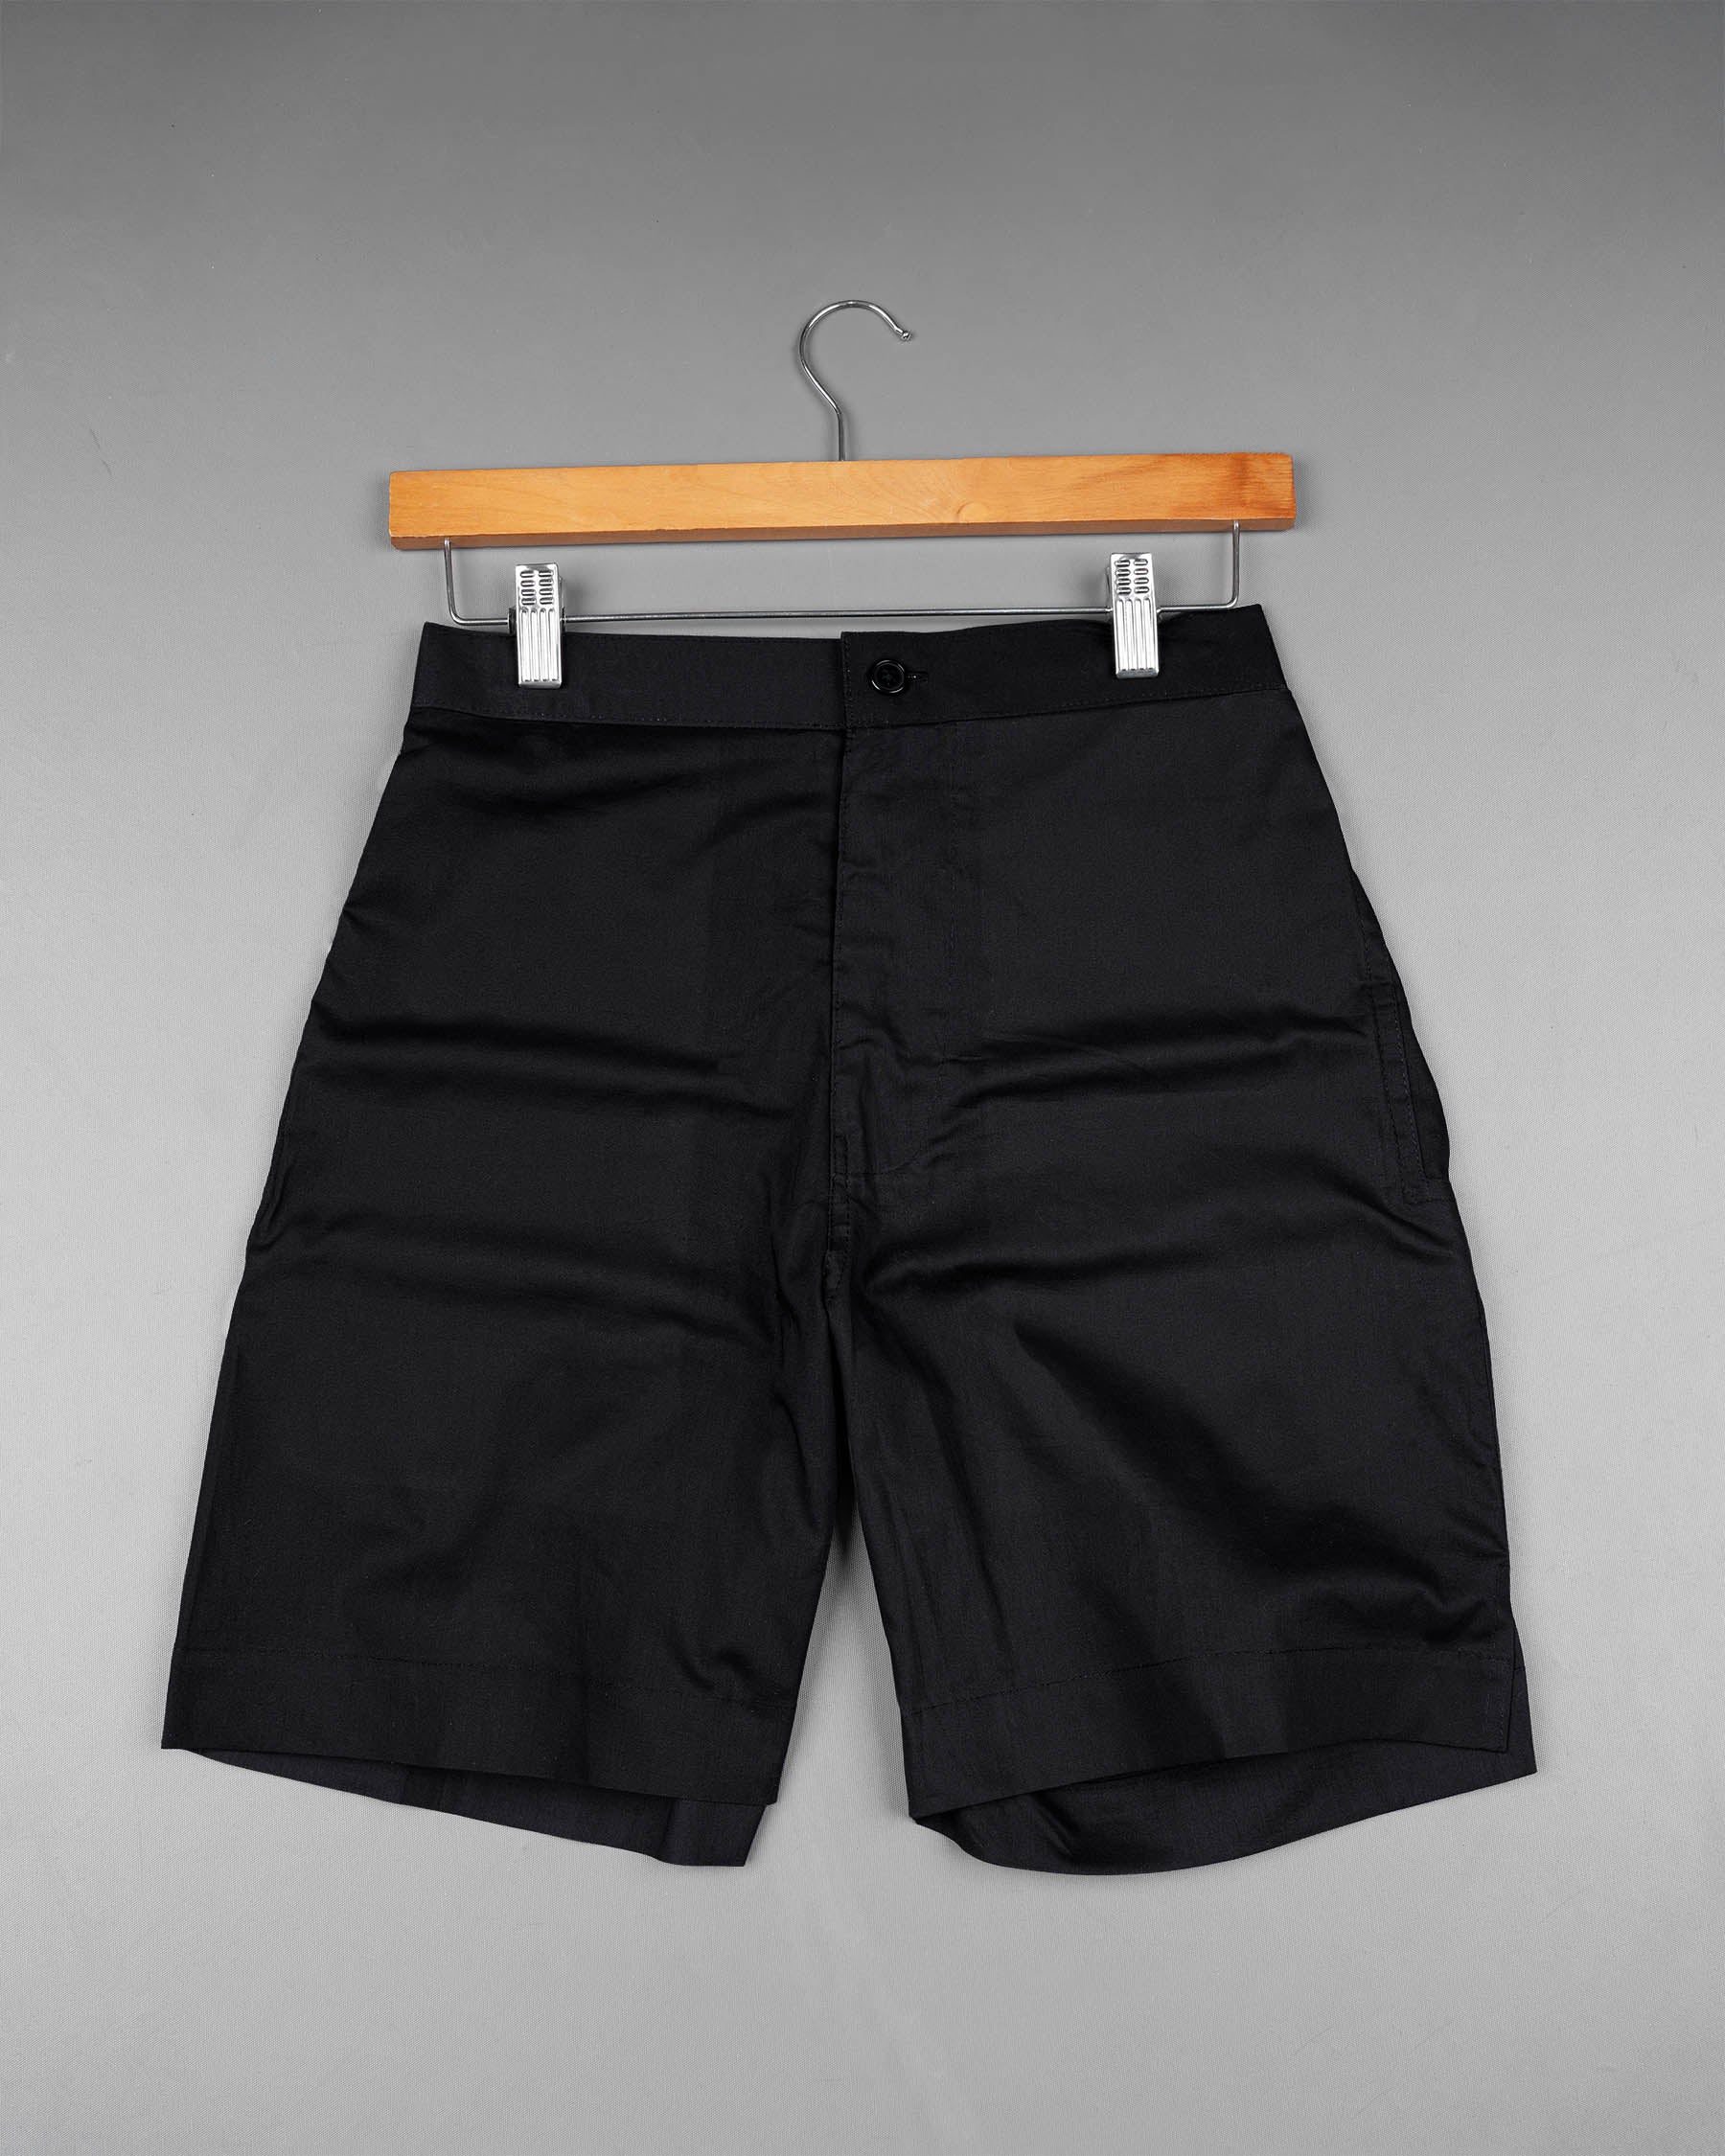 Kore Elevate Short, Men's Black Shorts with Zip Pockets